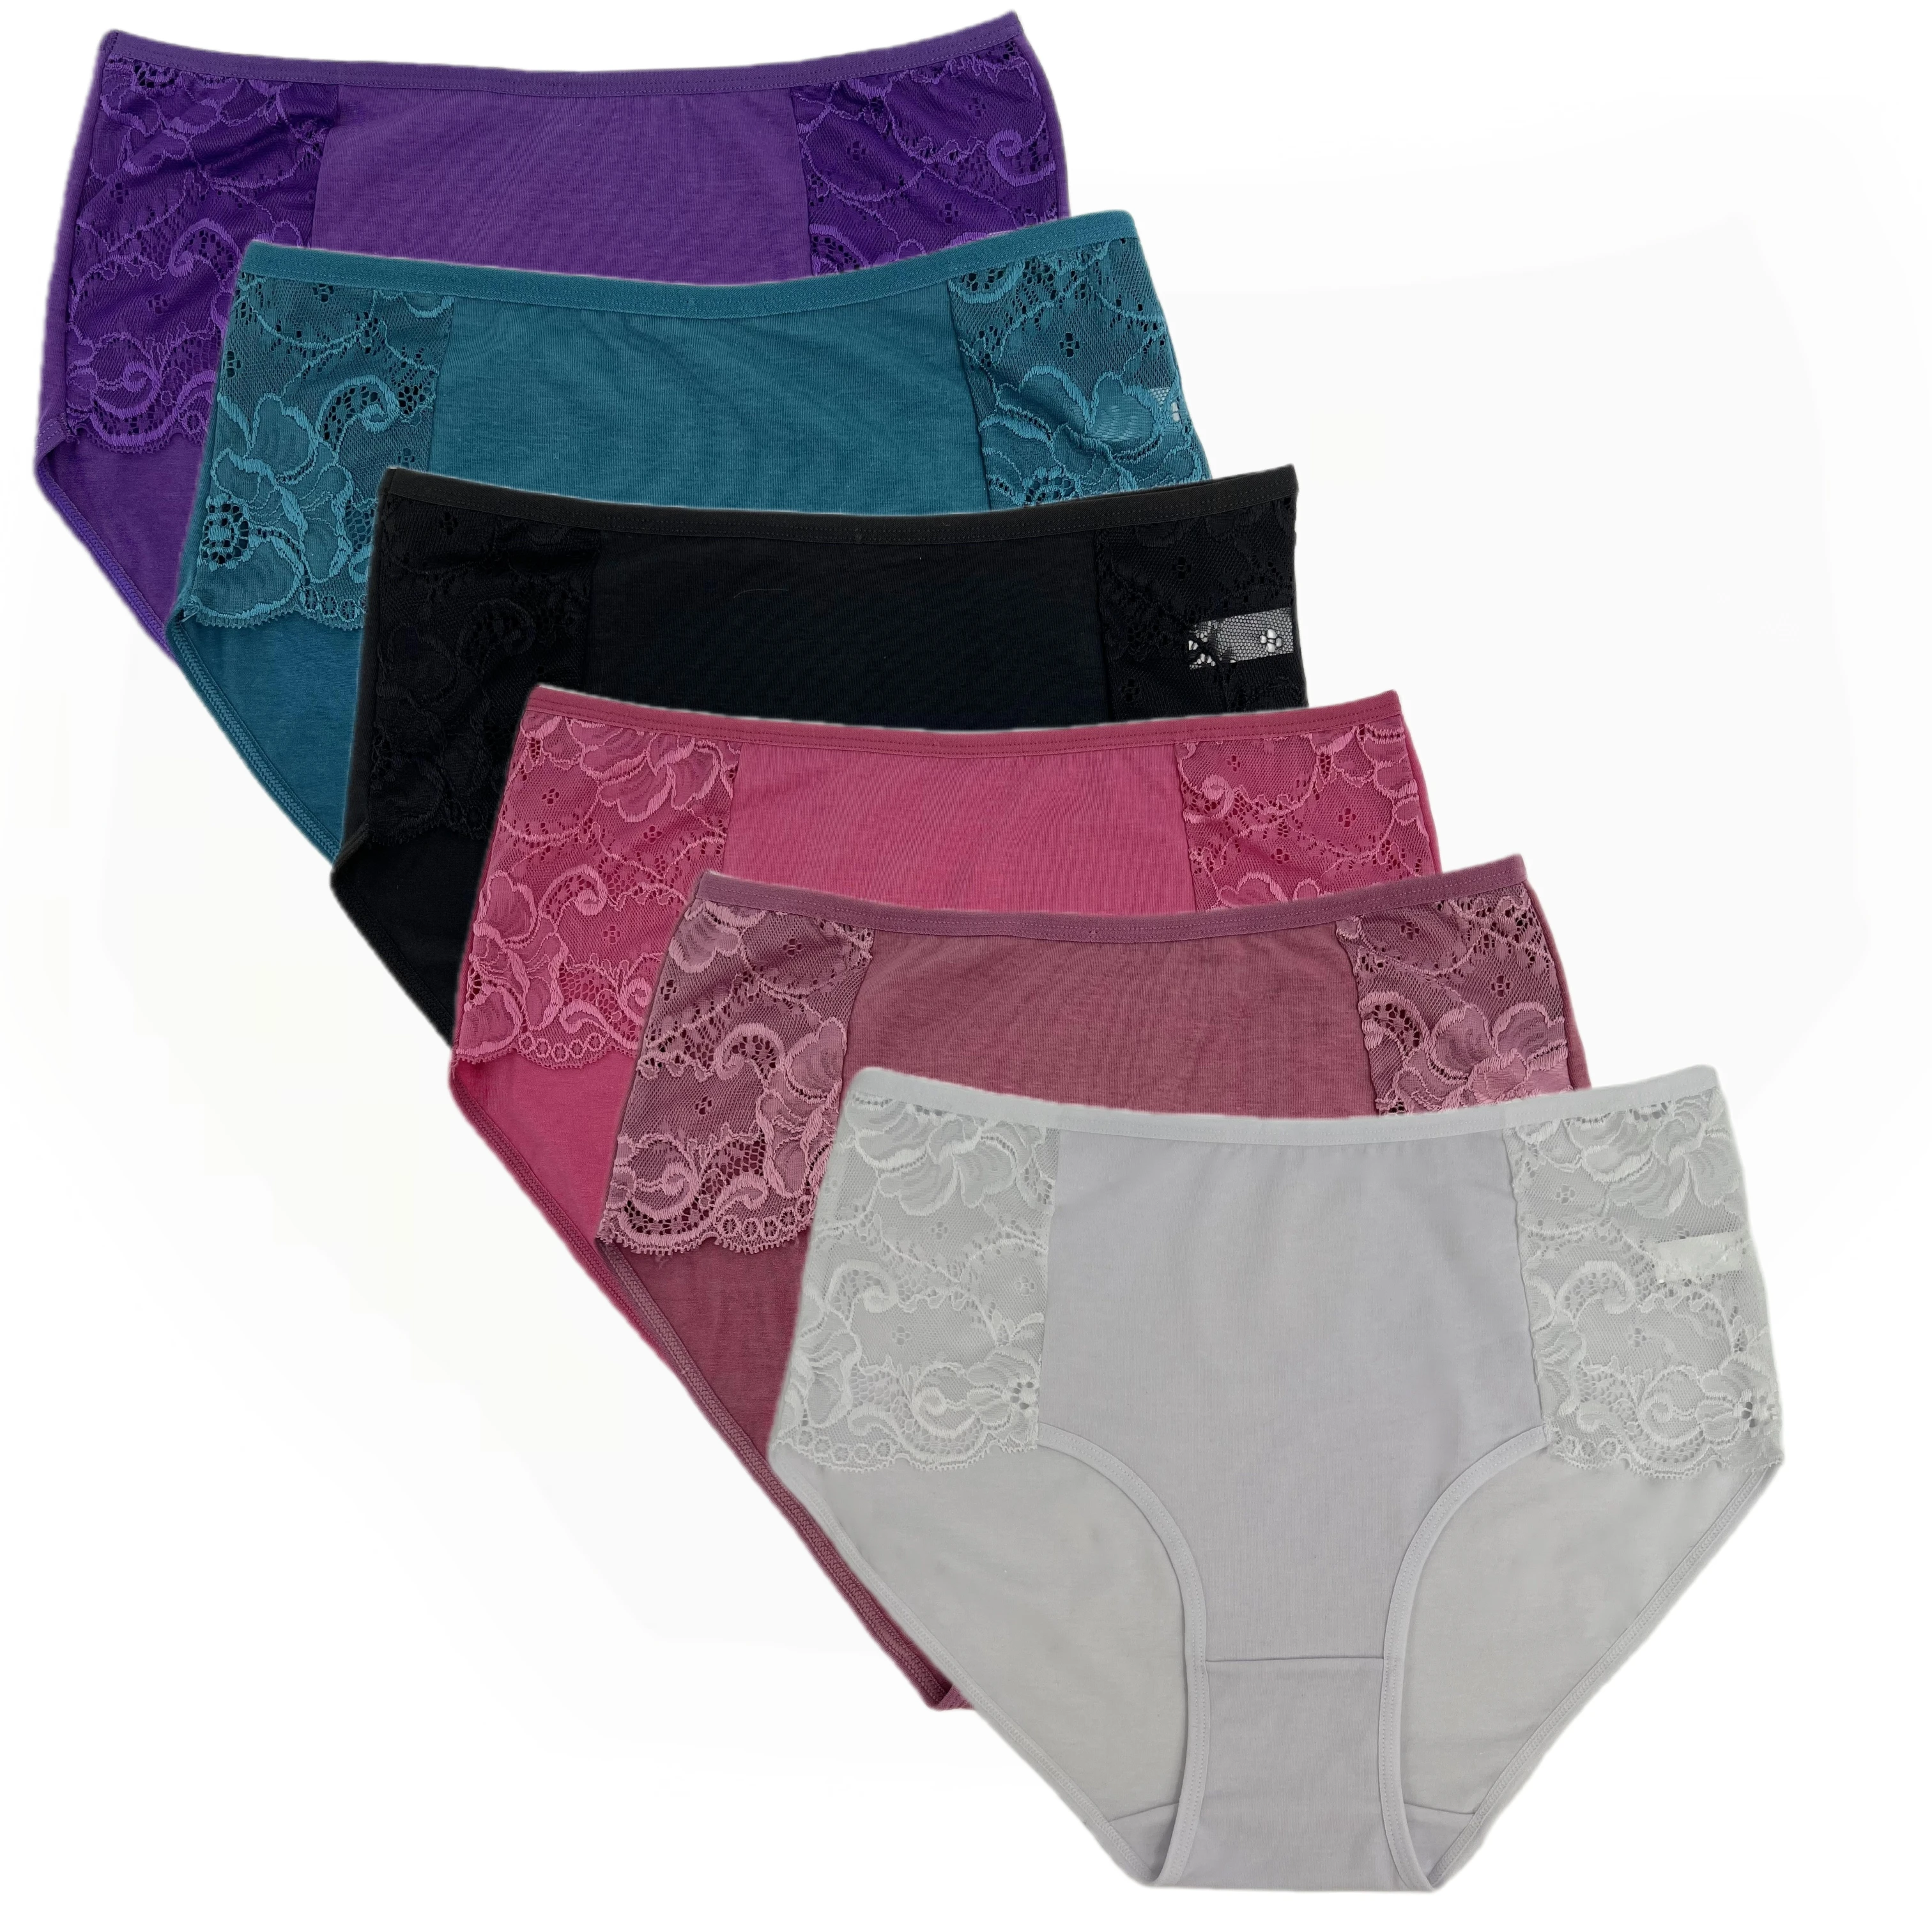 https://ae01.alicdn.com/kf/S678c5cf190794675bd93cbab0ddec73bD/Women-s-Cotton-Panties-Transparent-Women-s-Briefs-See-Thru-Underwear-Panti-Women-s-Cotton-Innerwear.jpg